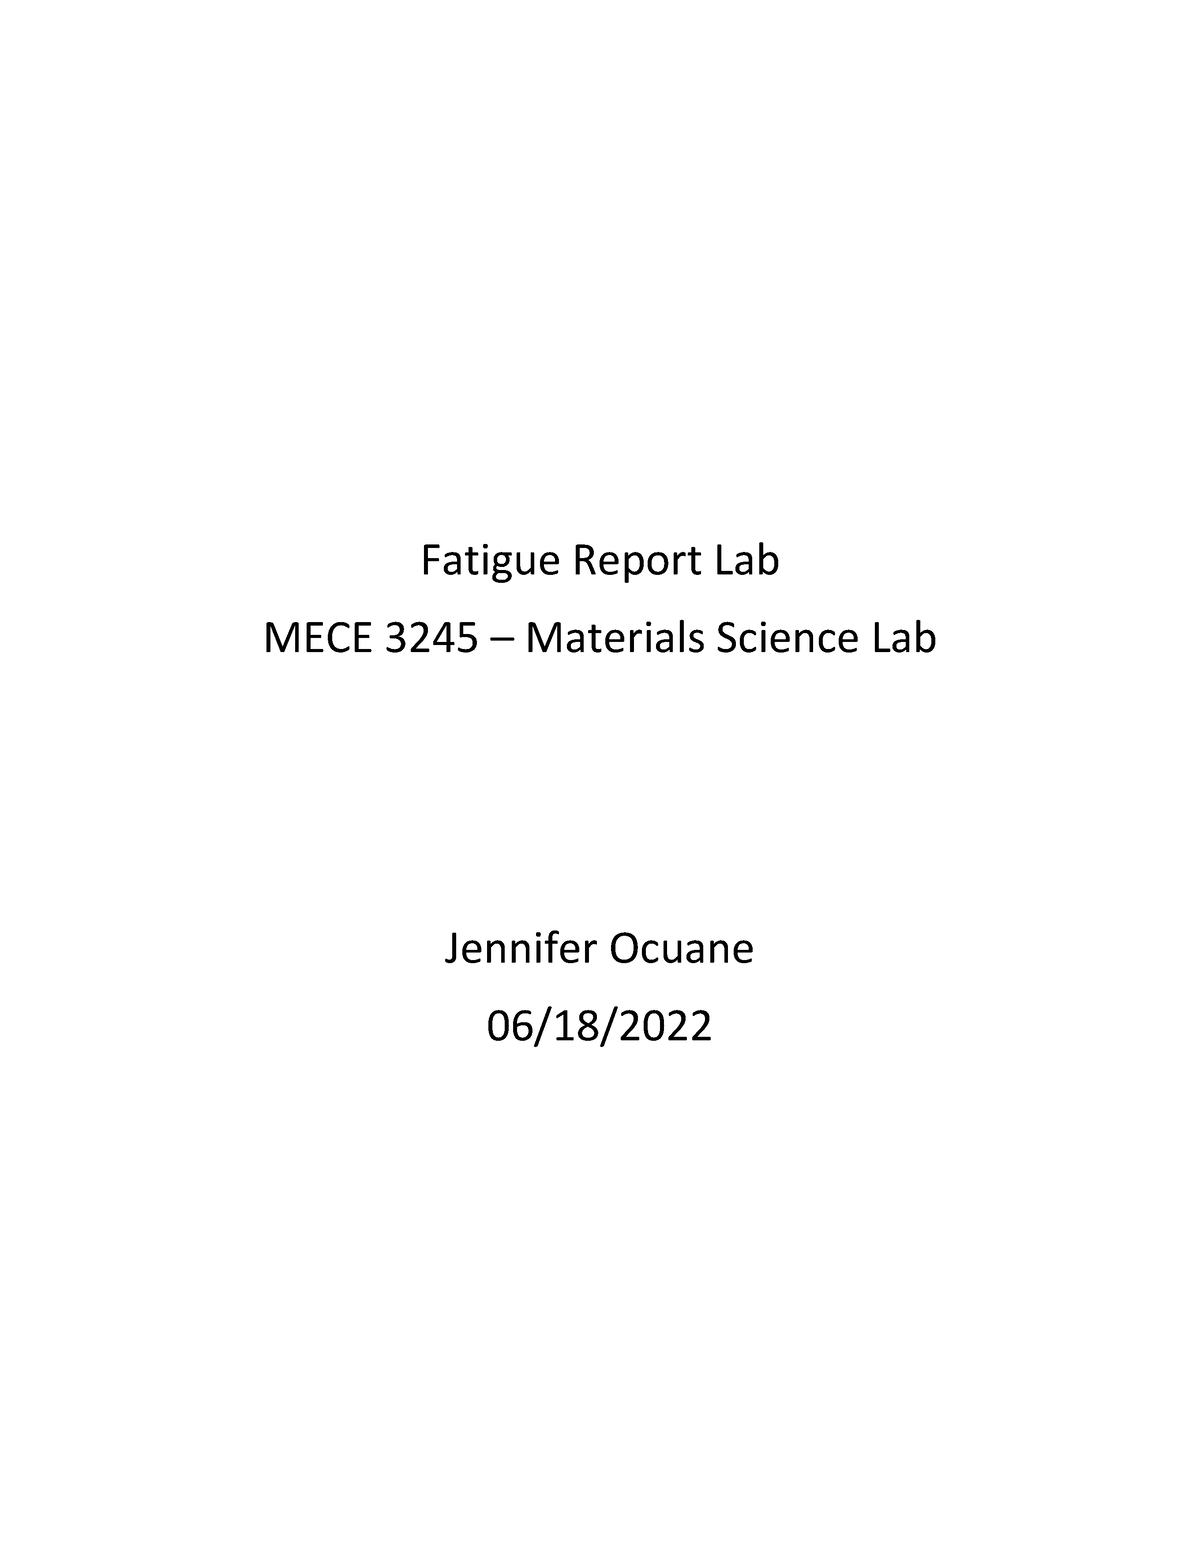 fatigue test experiment lab report